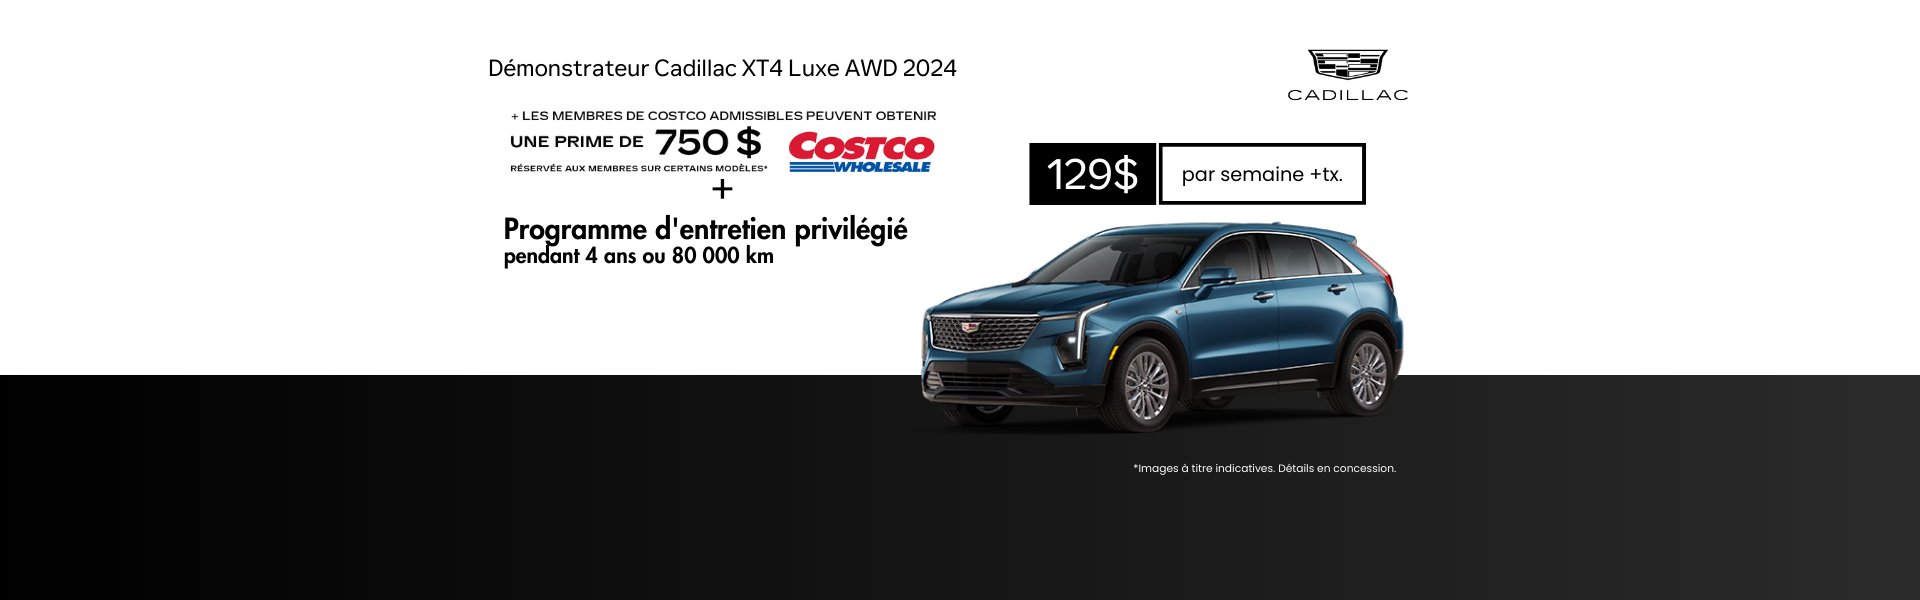 Cadillac XT4 2024 Luxe